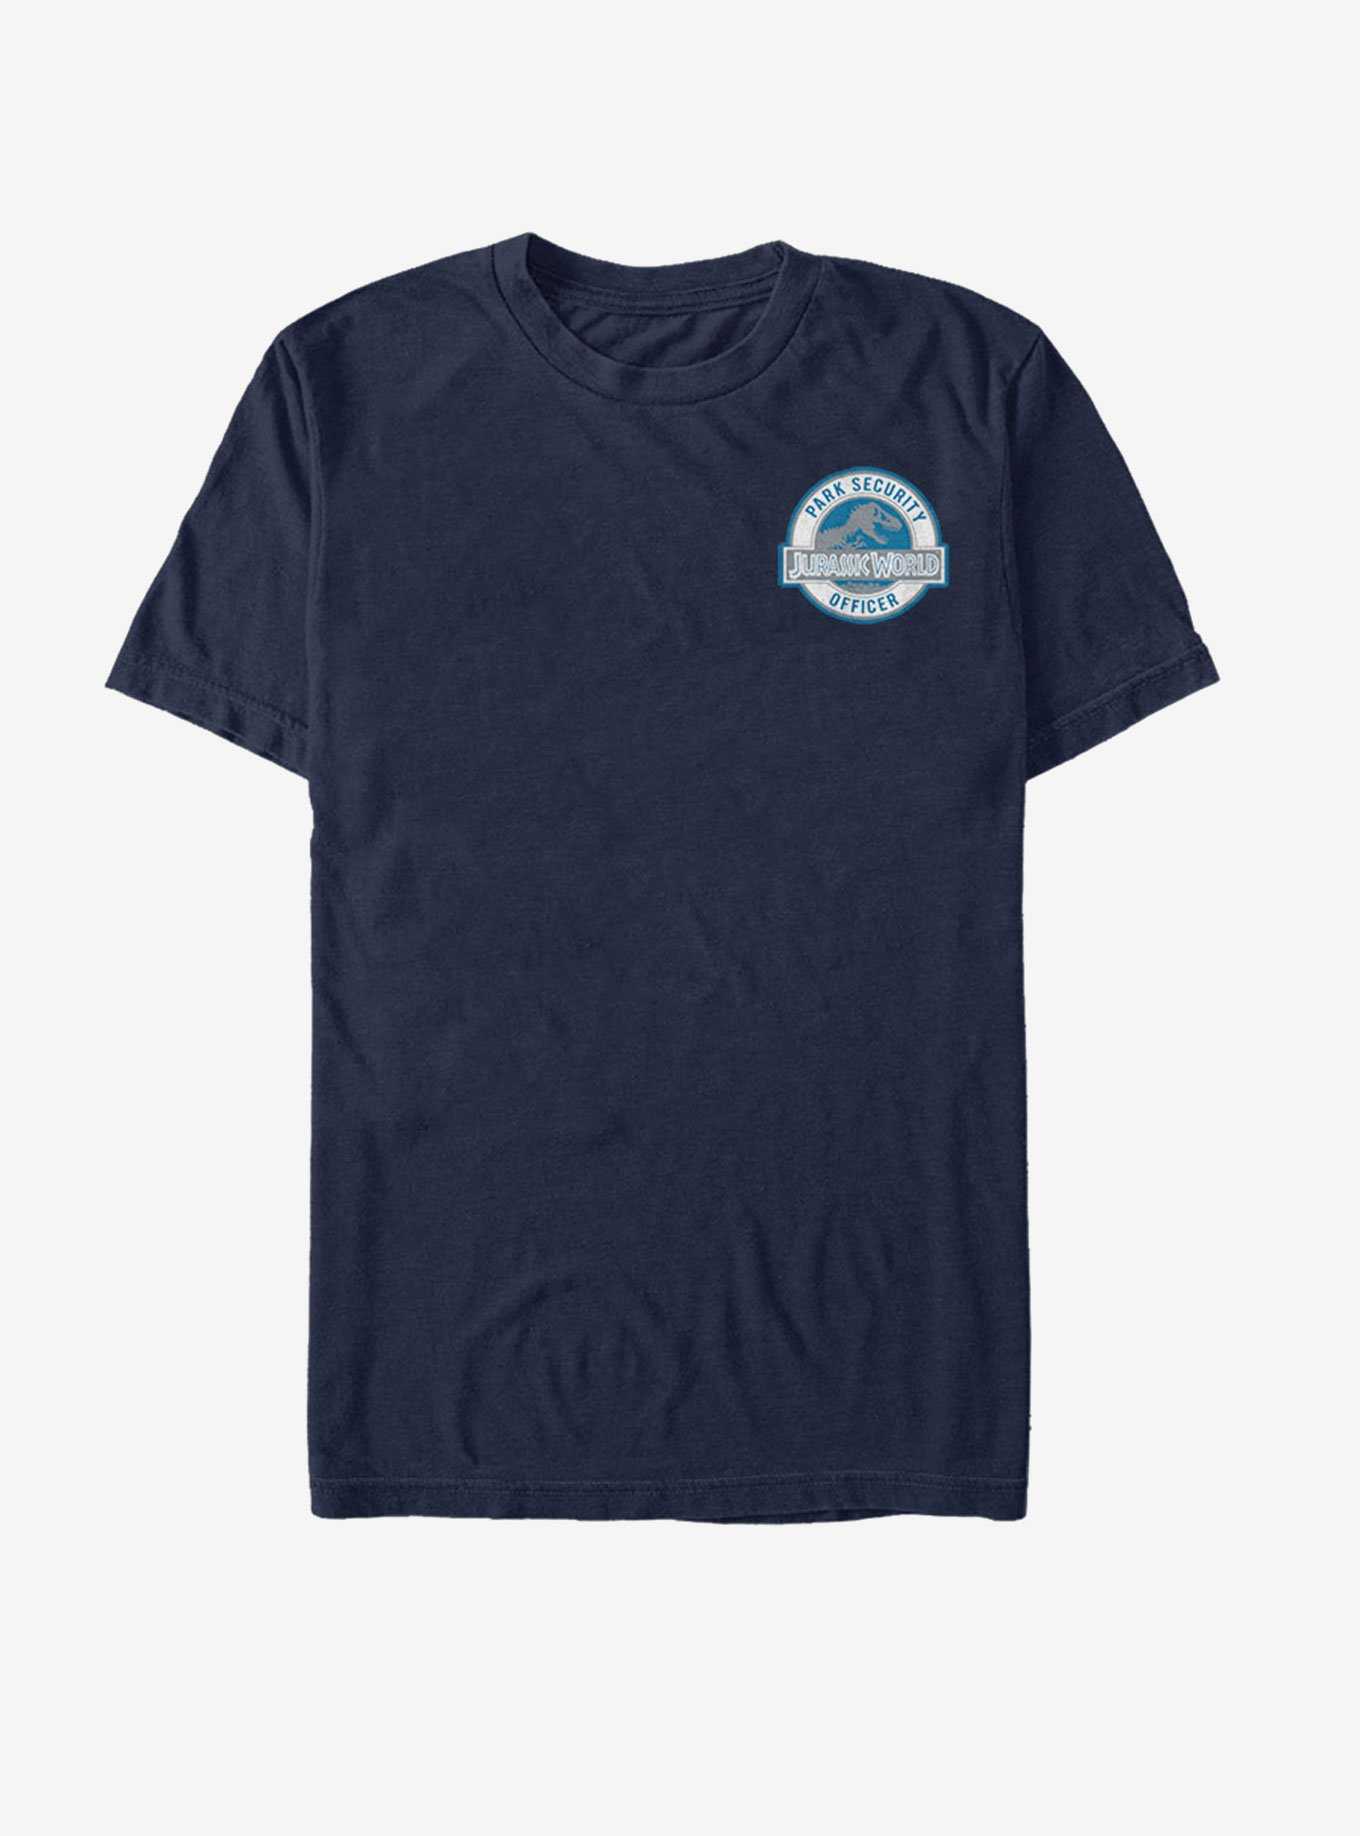 Jurassic Park Jurassic World Ranger Patch T-Shirt, NAVY, hi-res